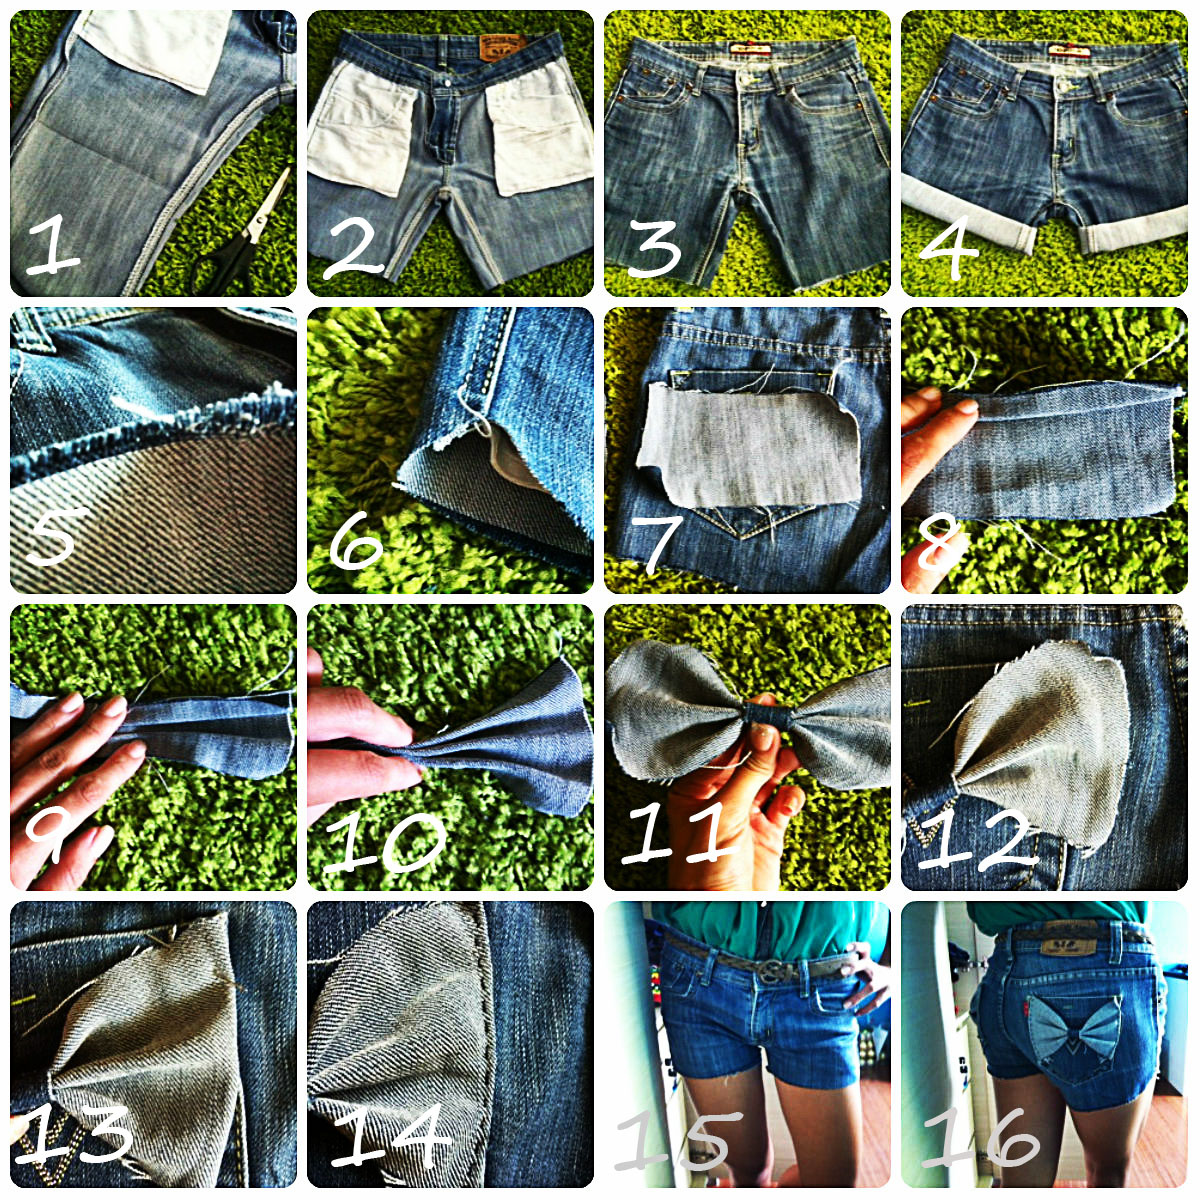 TheDIYroom: #1 DIY: Jeans to shorts with bow pockets